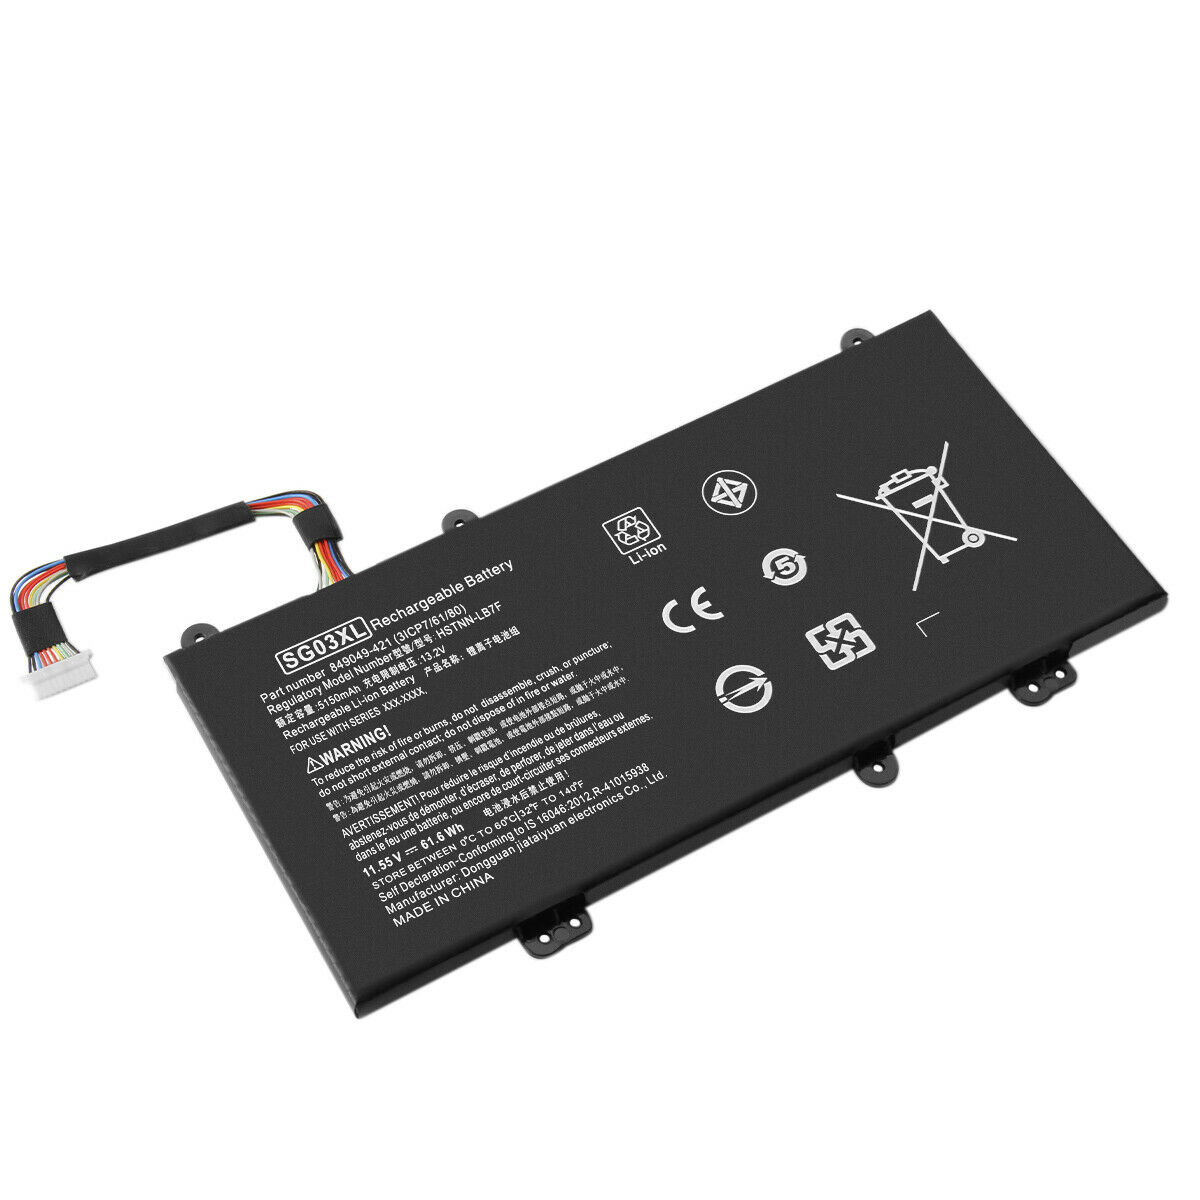 SG03XL HP Envy M7-U009DX M7-U 17-U HSTNN-LB7F 849315-850 compatible battery